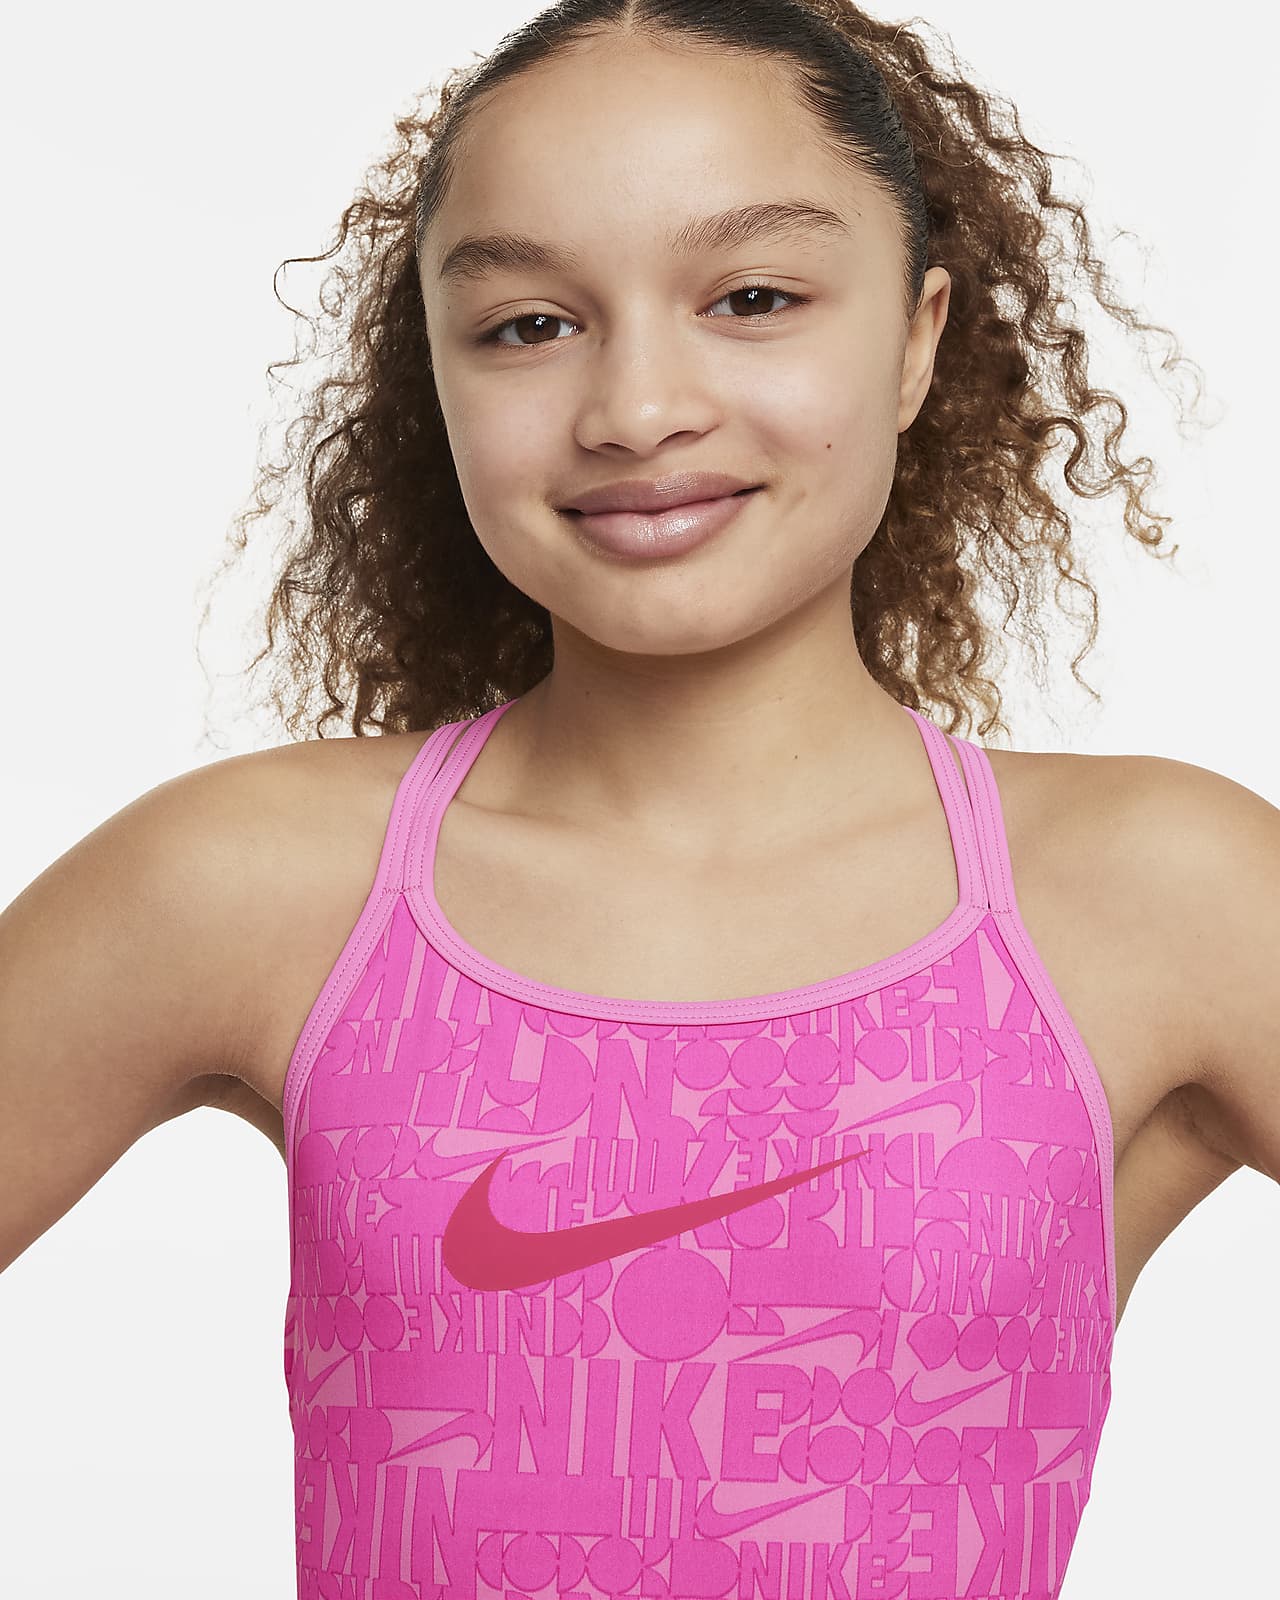 Buy Nike Big Kids Sports Bras Girls Pink online